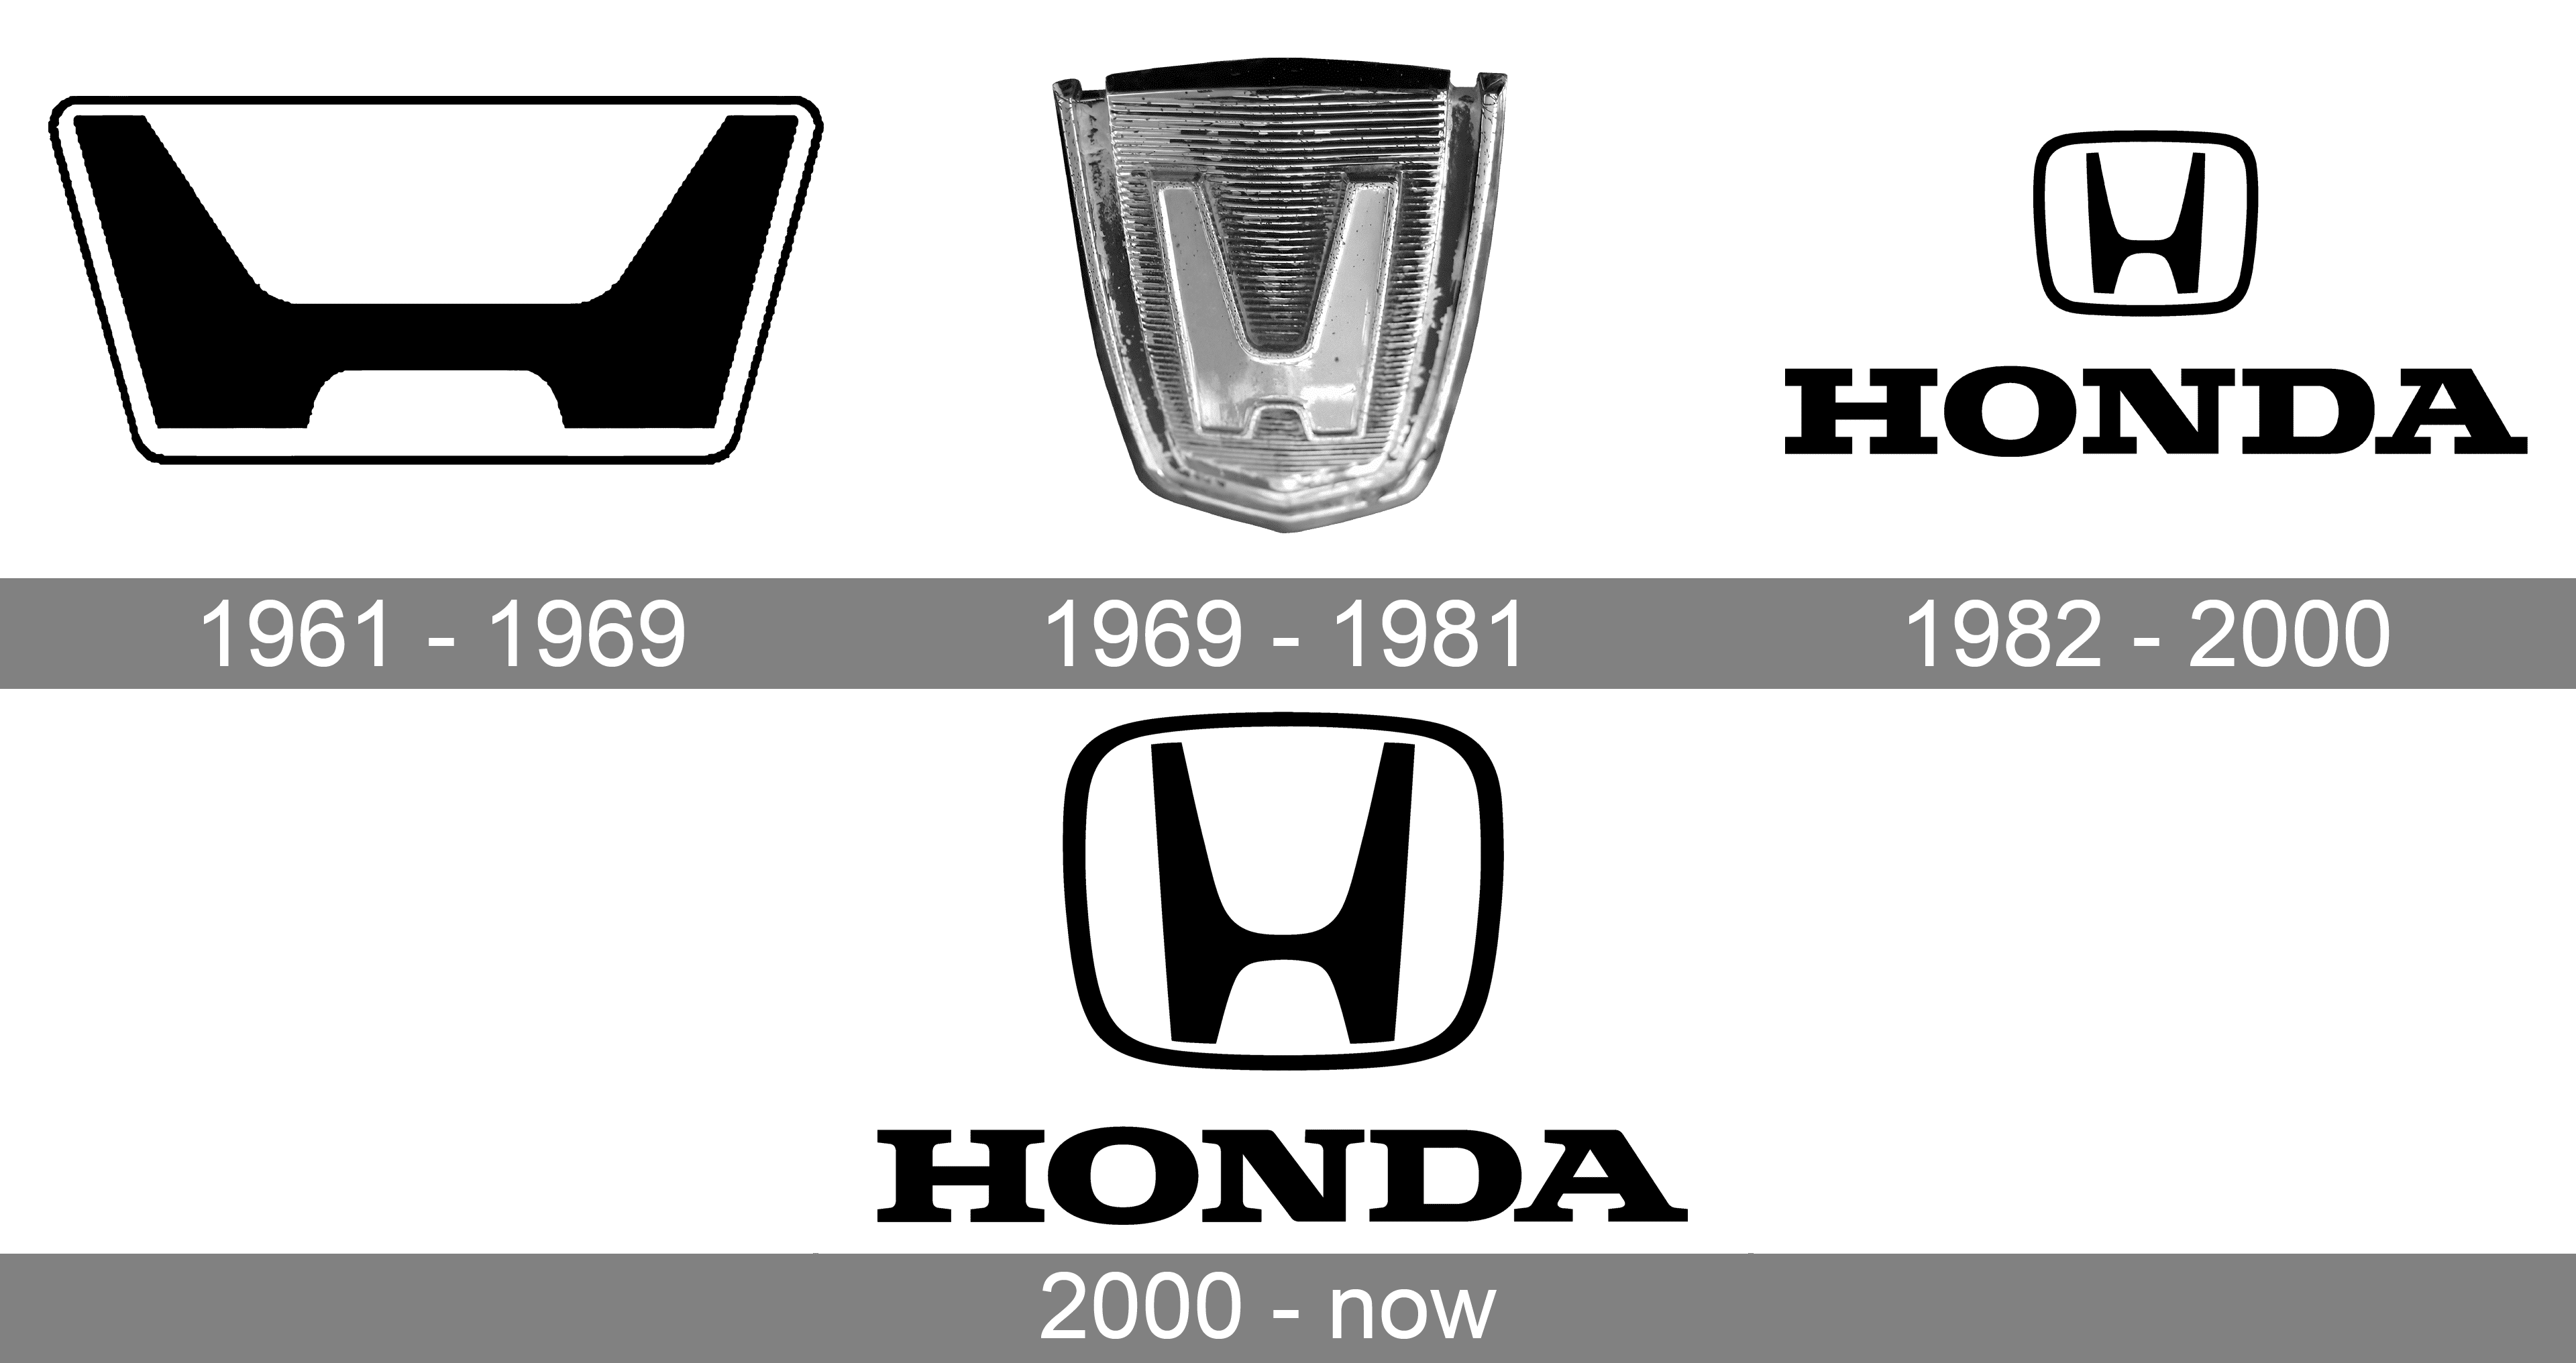 Honda Logo Meaning And History Honda Symbol